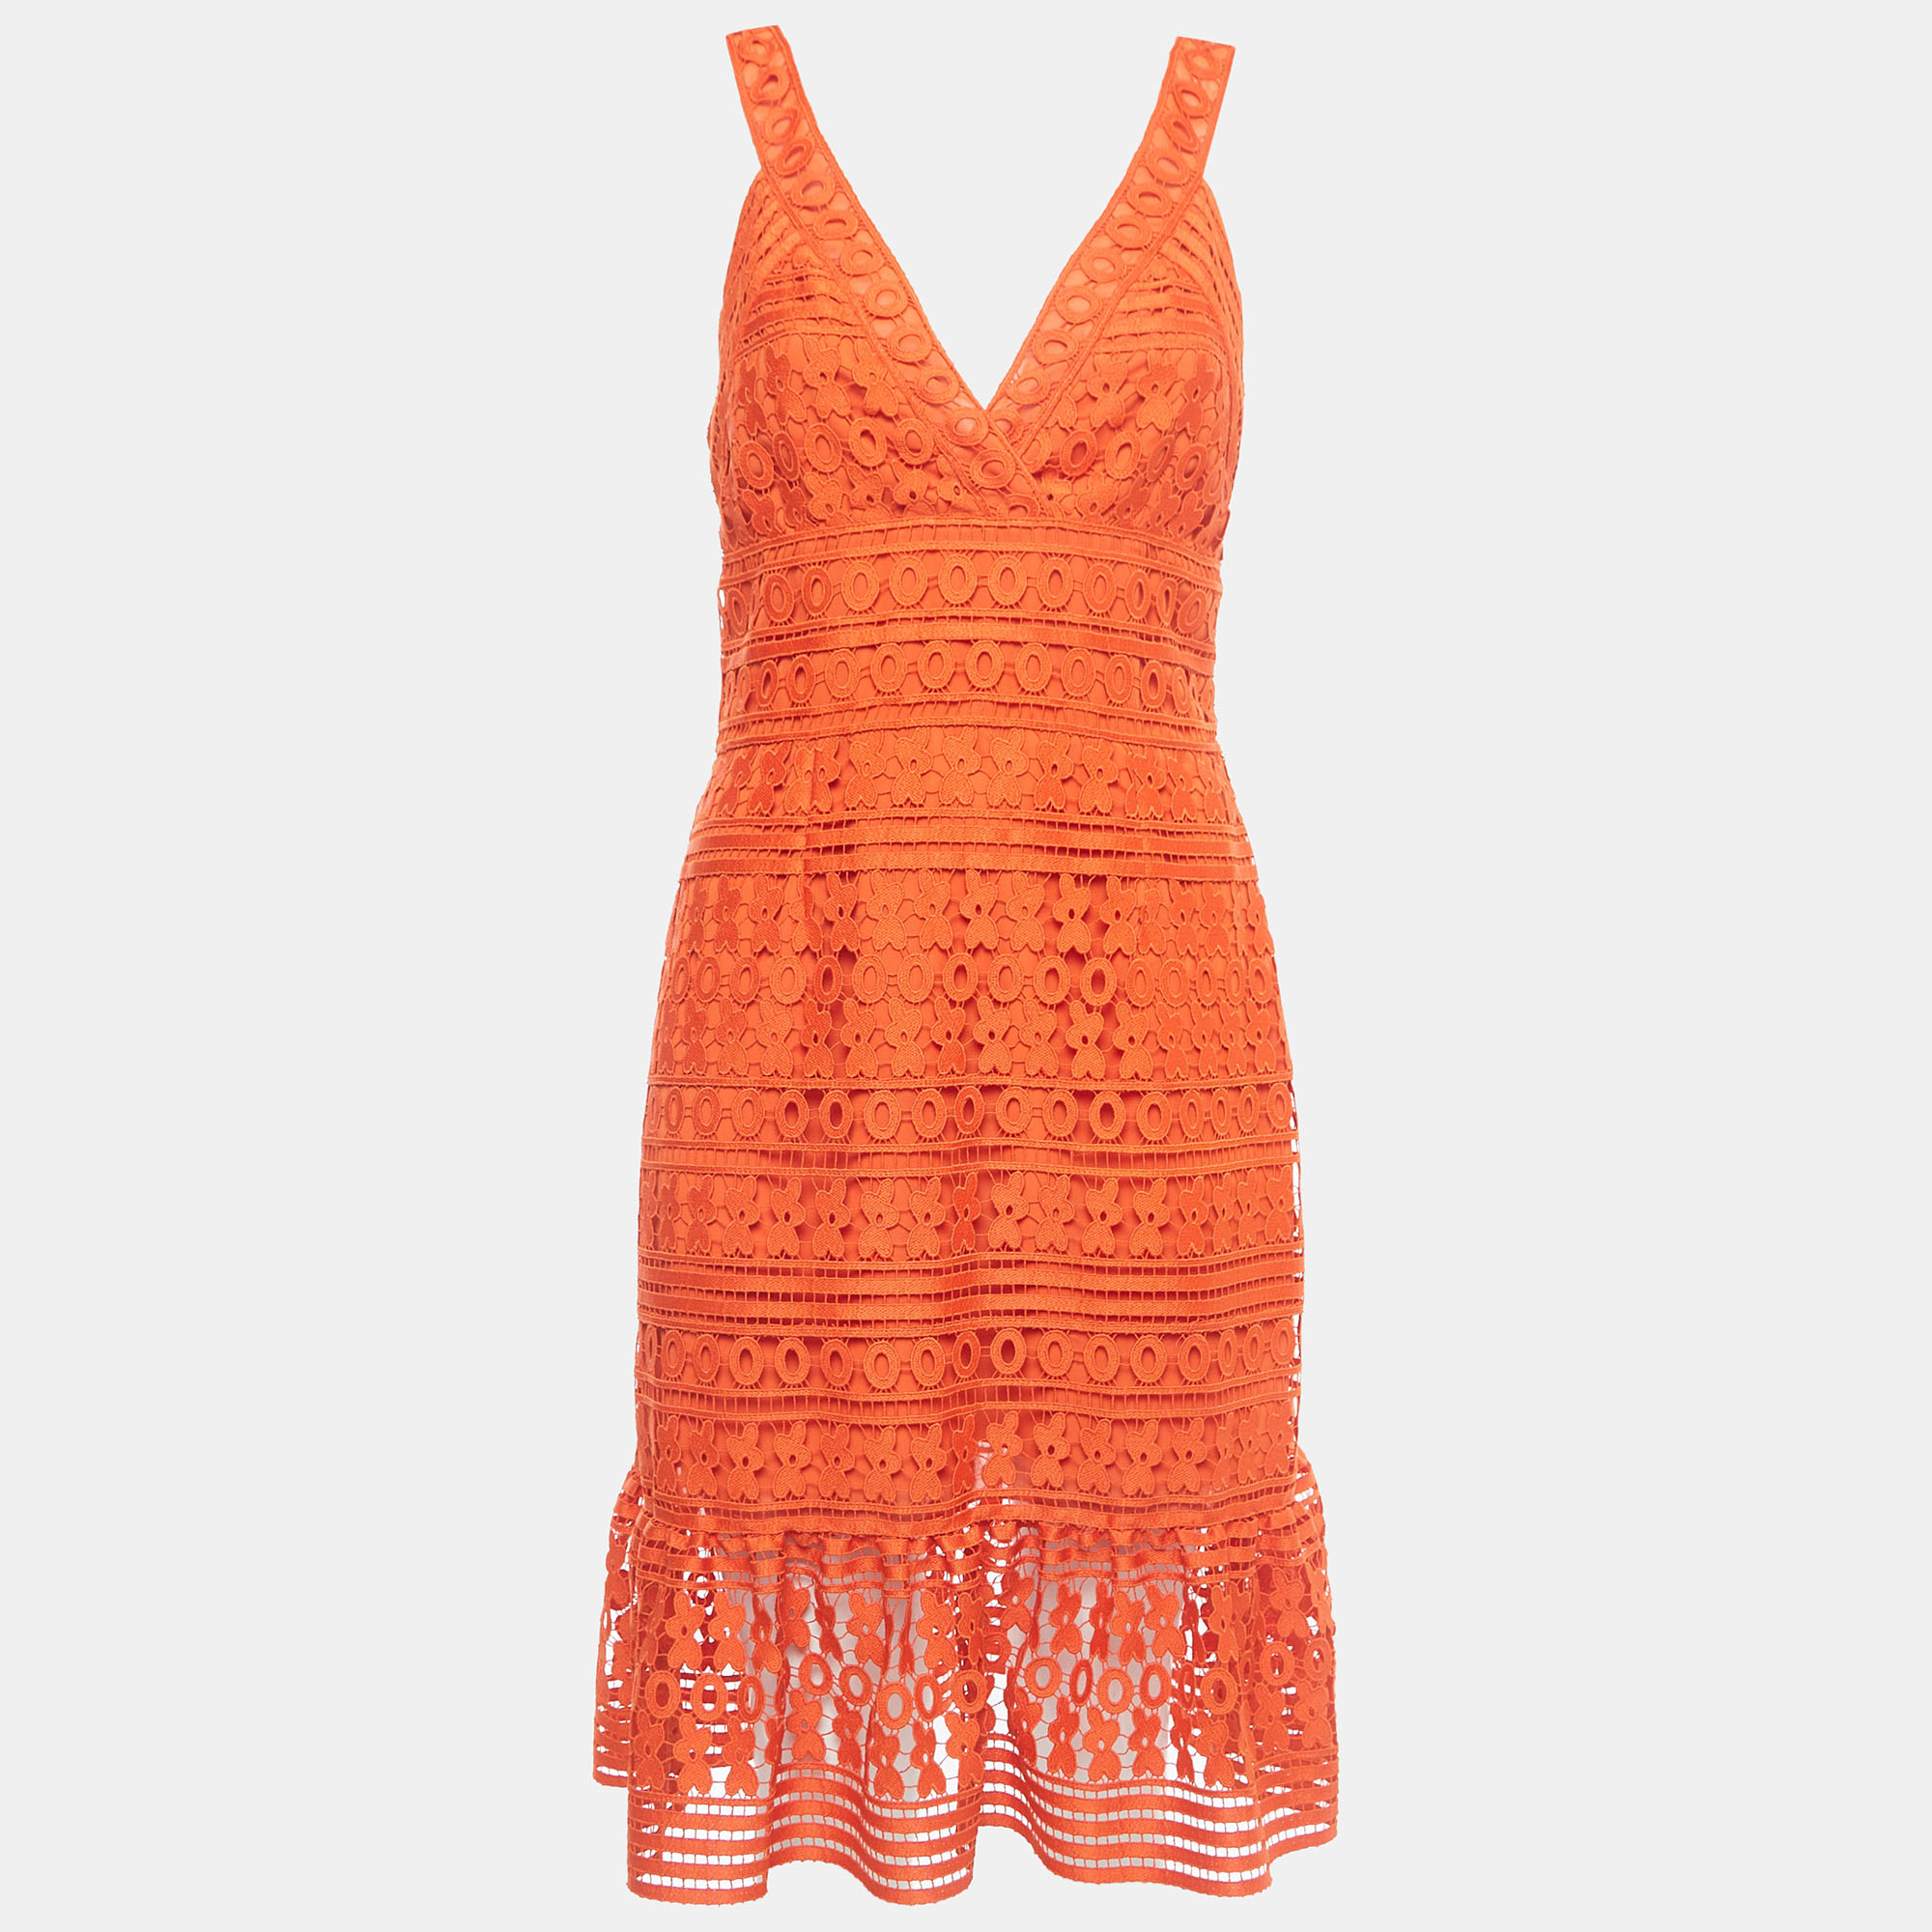 Diane von furstenberg orange guipure lace tiana sleeveless dress m